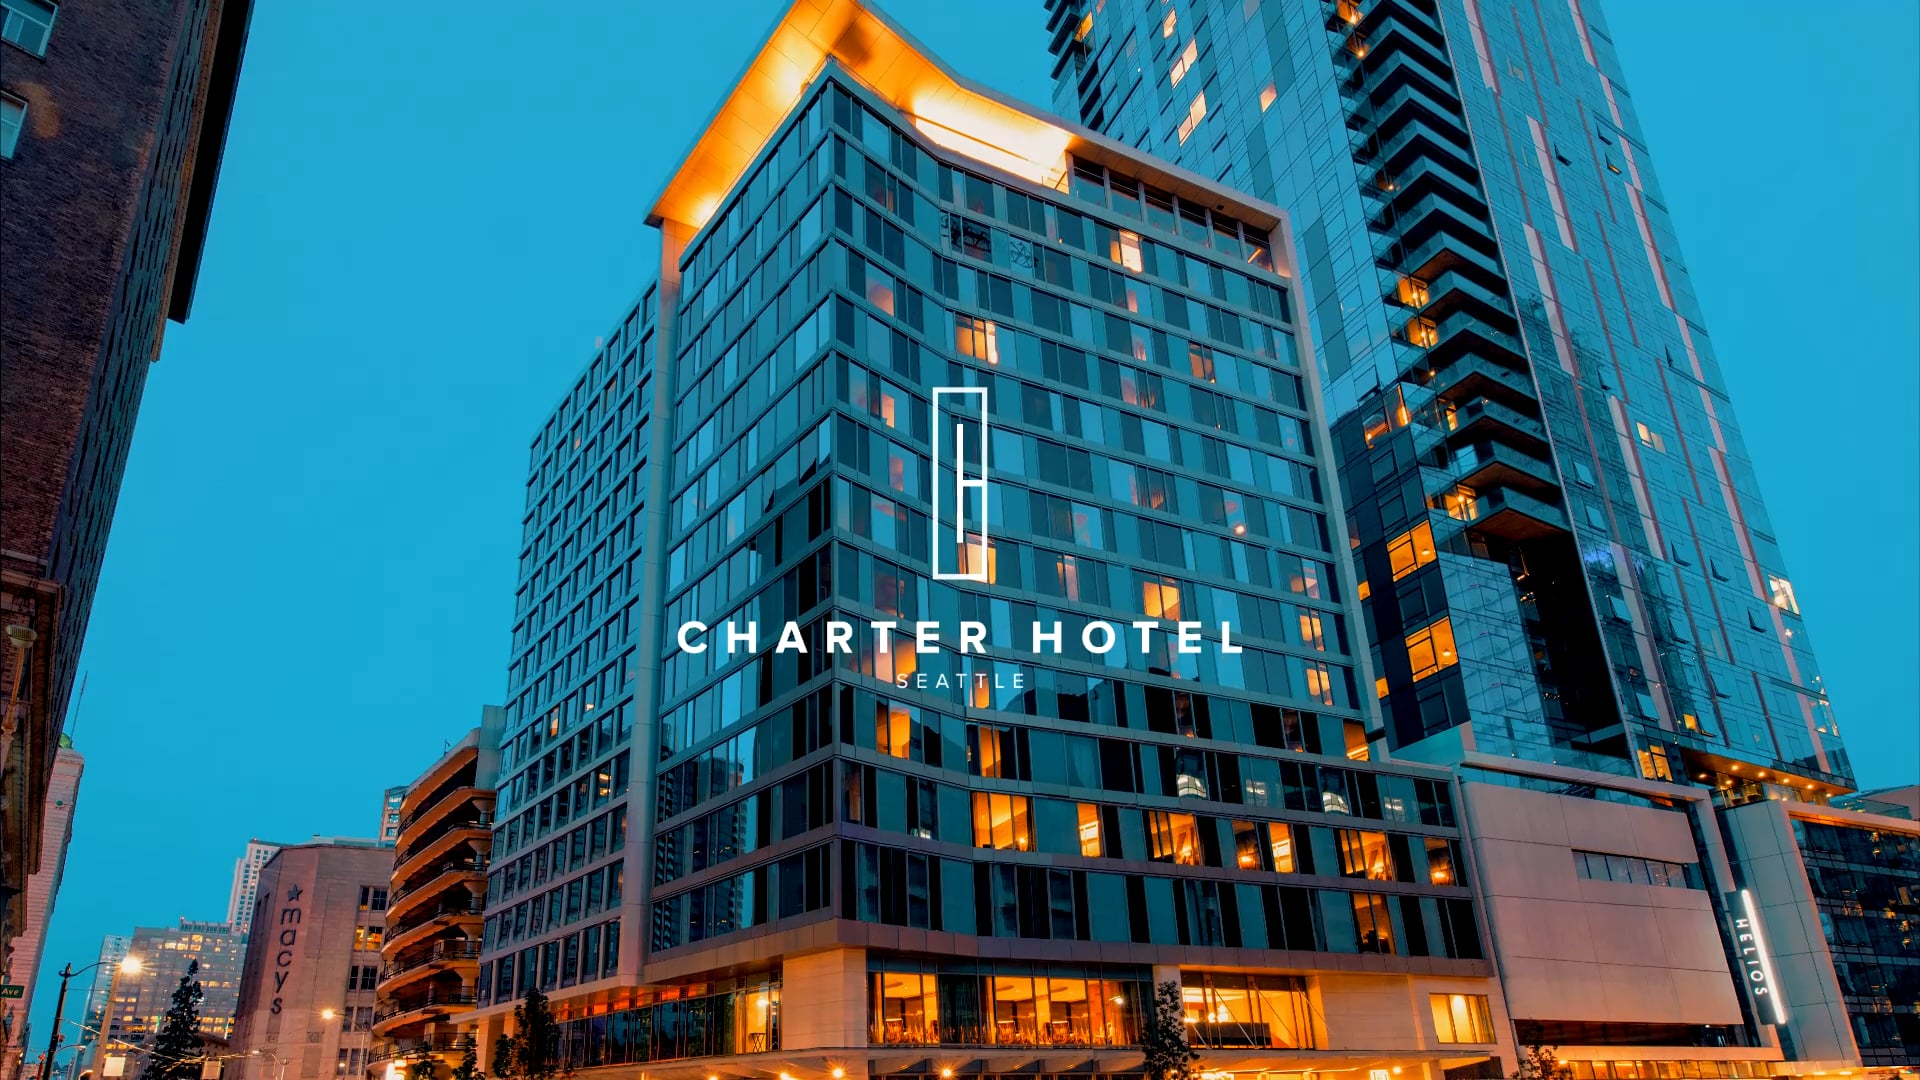 CHARTER HOTEL | Promo Video